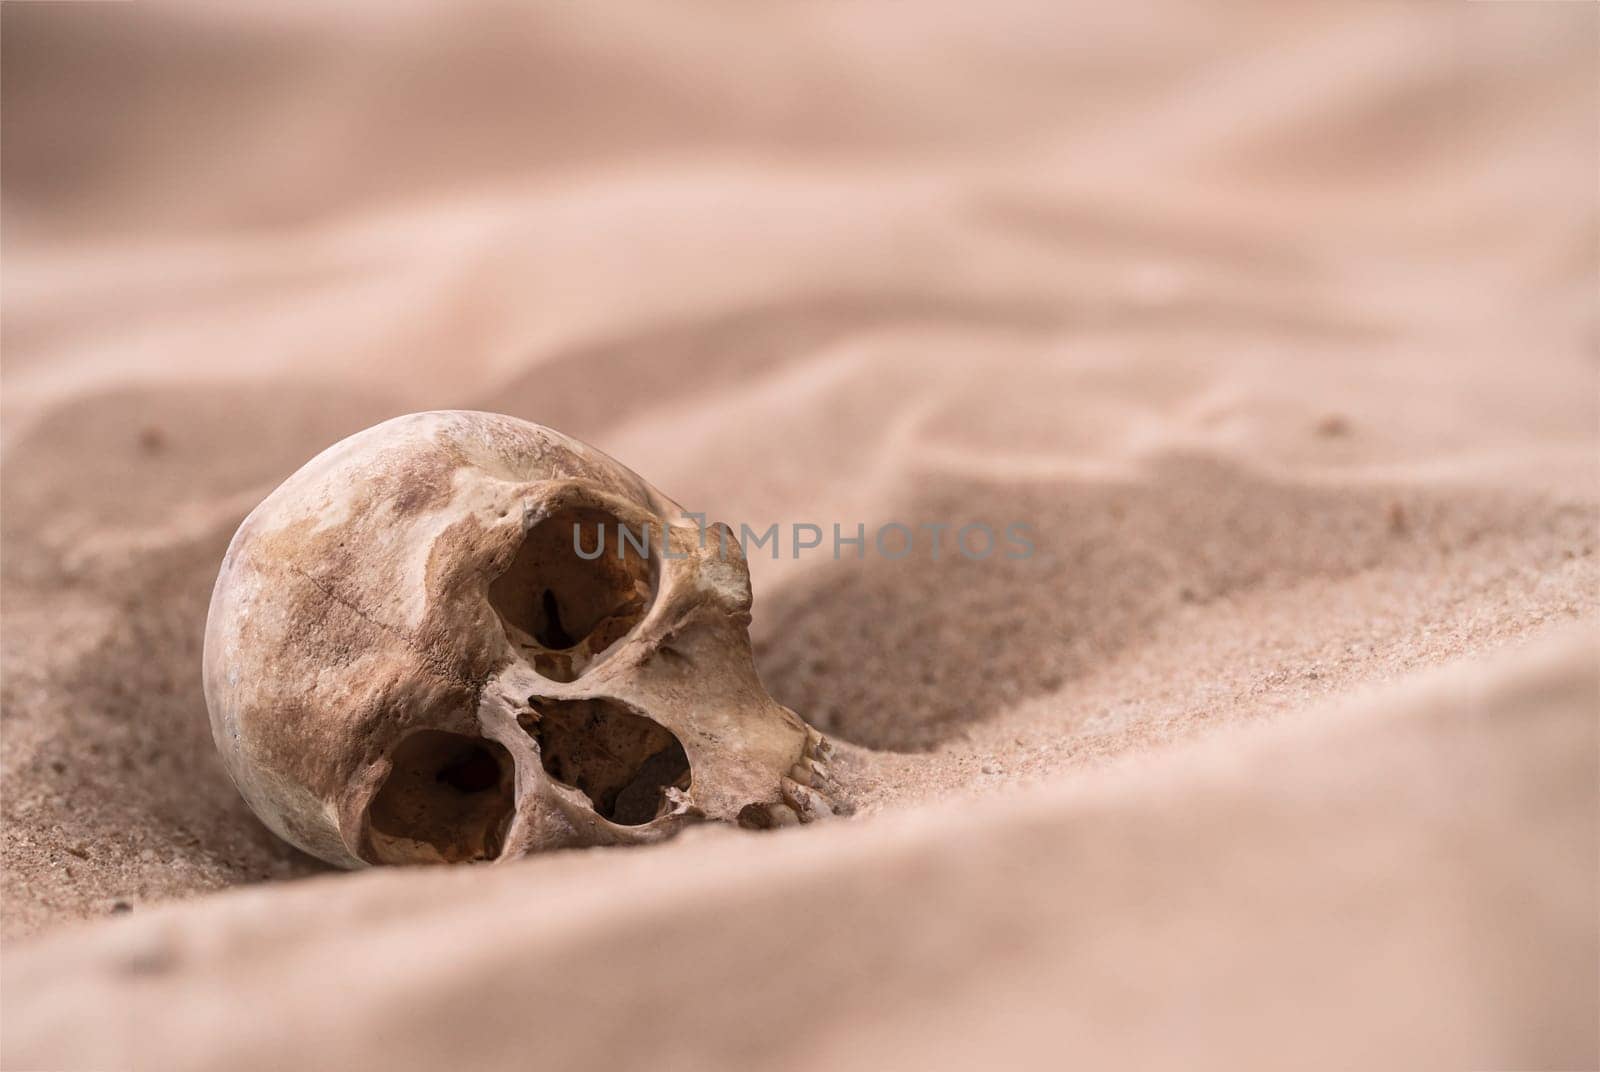 A Human Skull Emerging From A Desert Burial